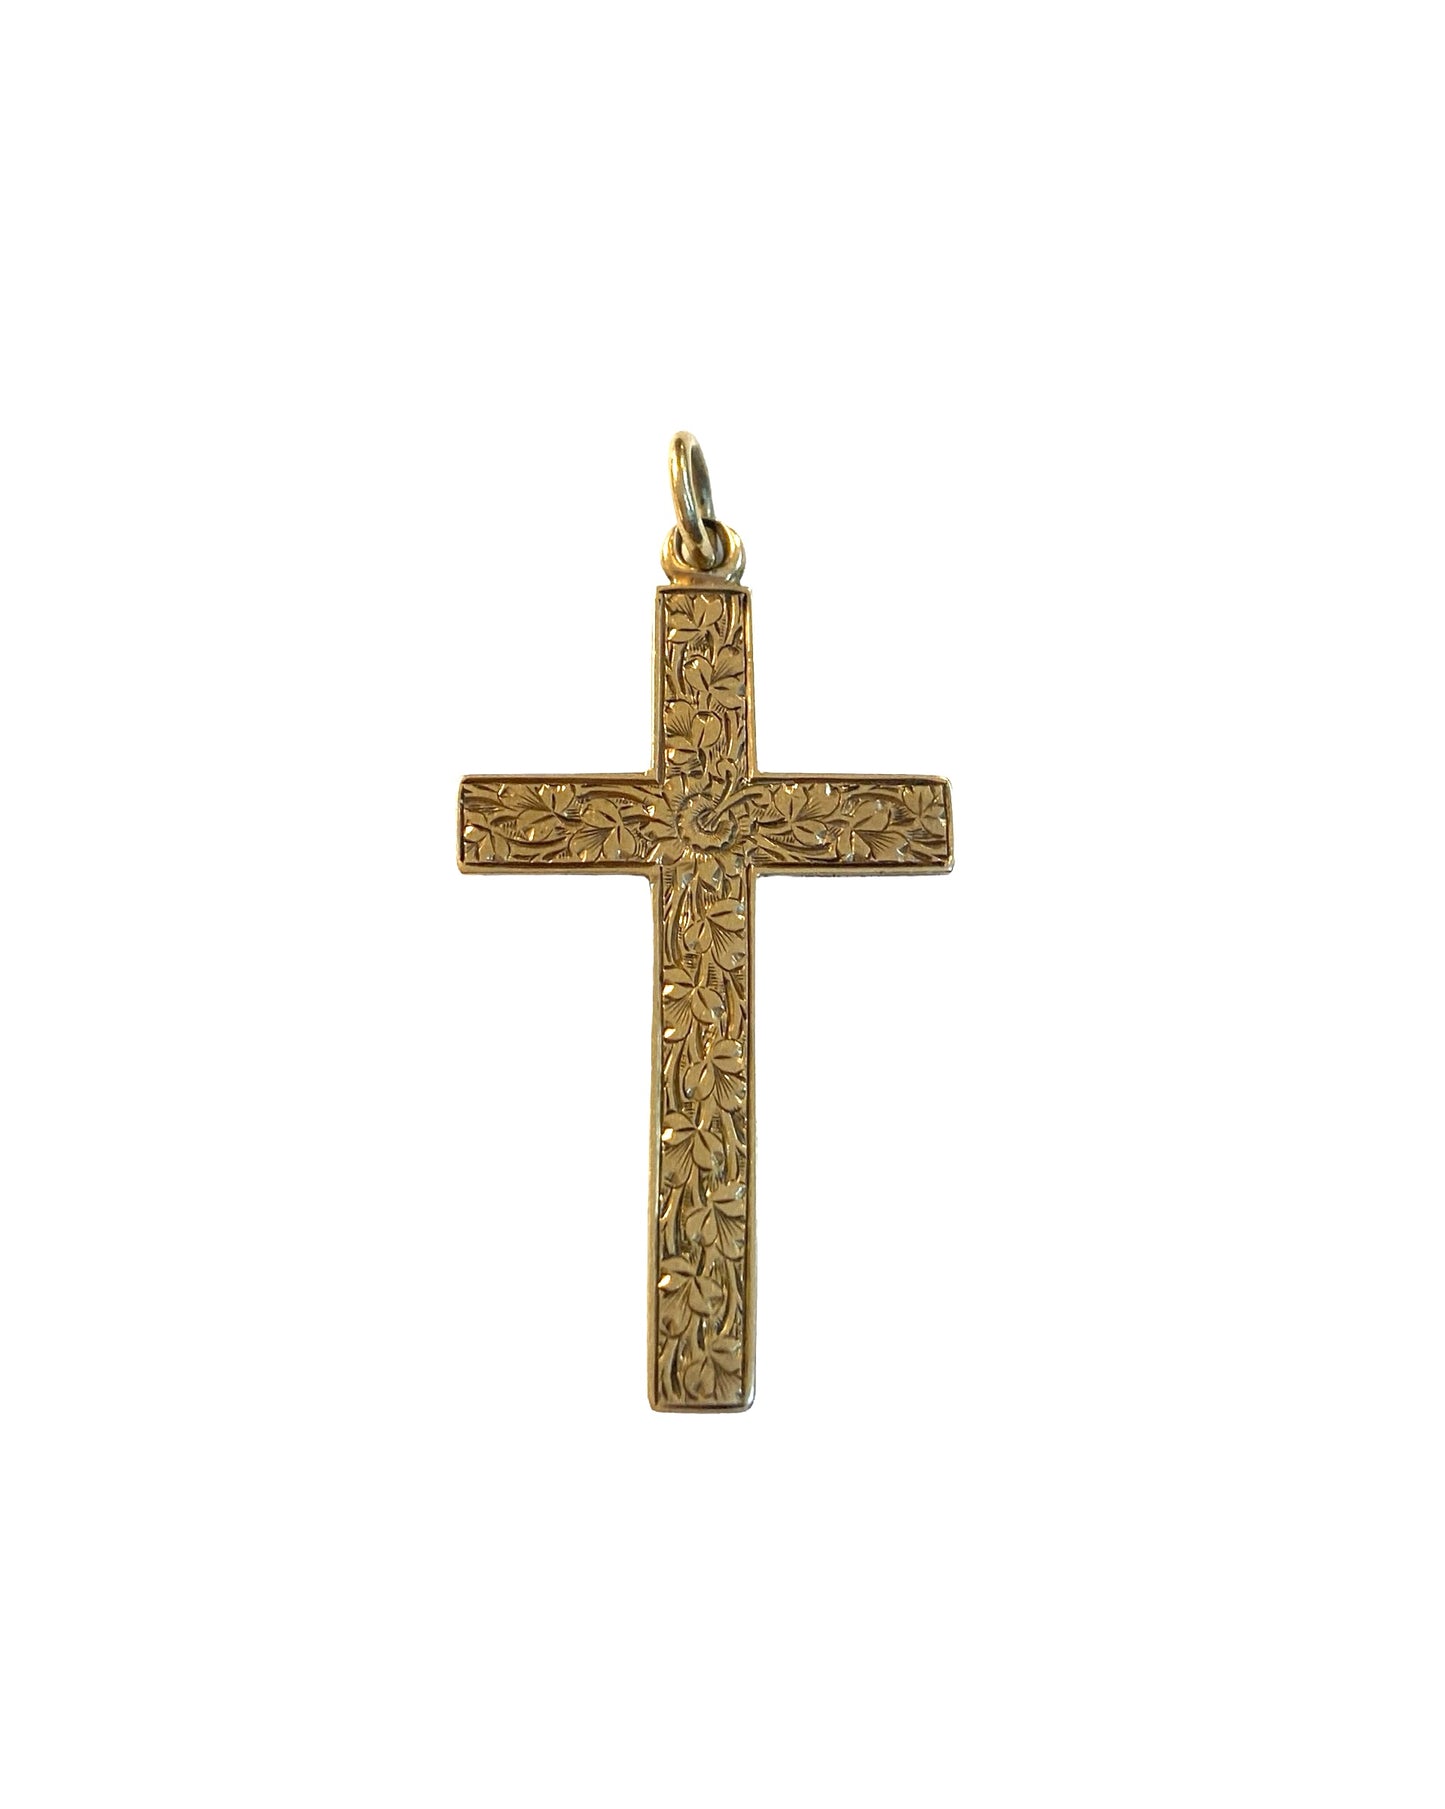 9ct antique cross circa 1902 by JM